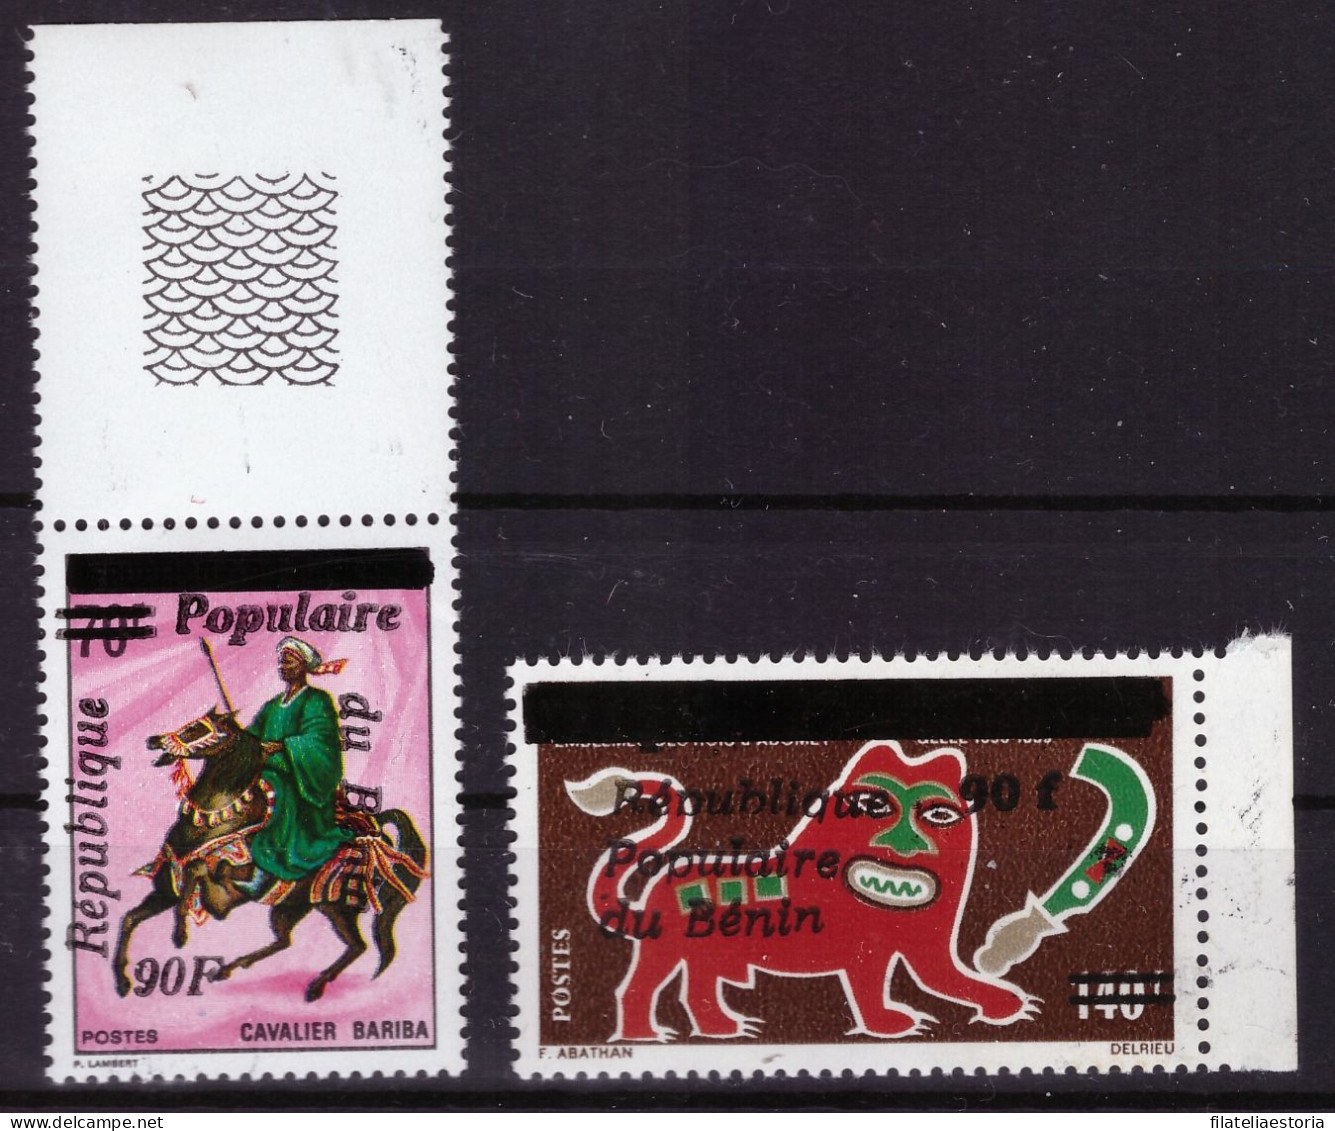 Benin 1986 - MNH ** - Timbres Surchargés - Michel Nr. 428-429 11€ (ben030) - Bénin – Dahomey (1960-...)